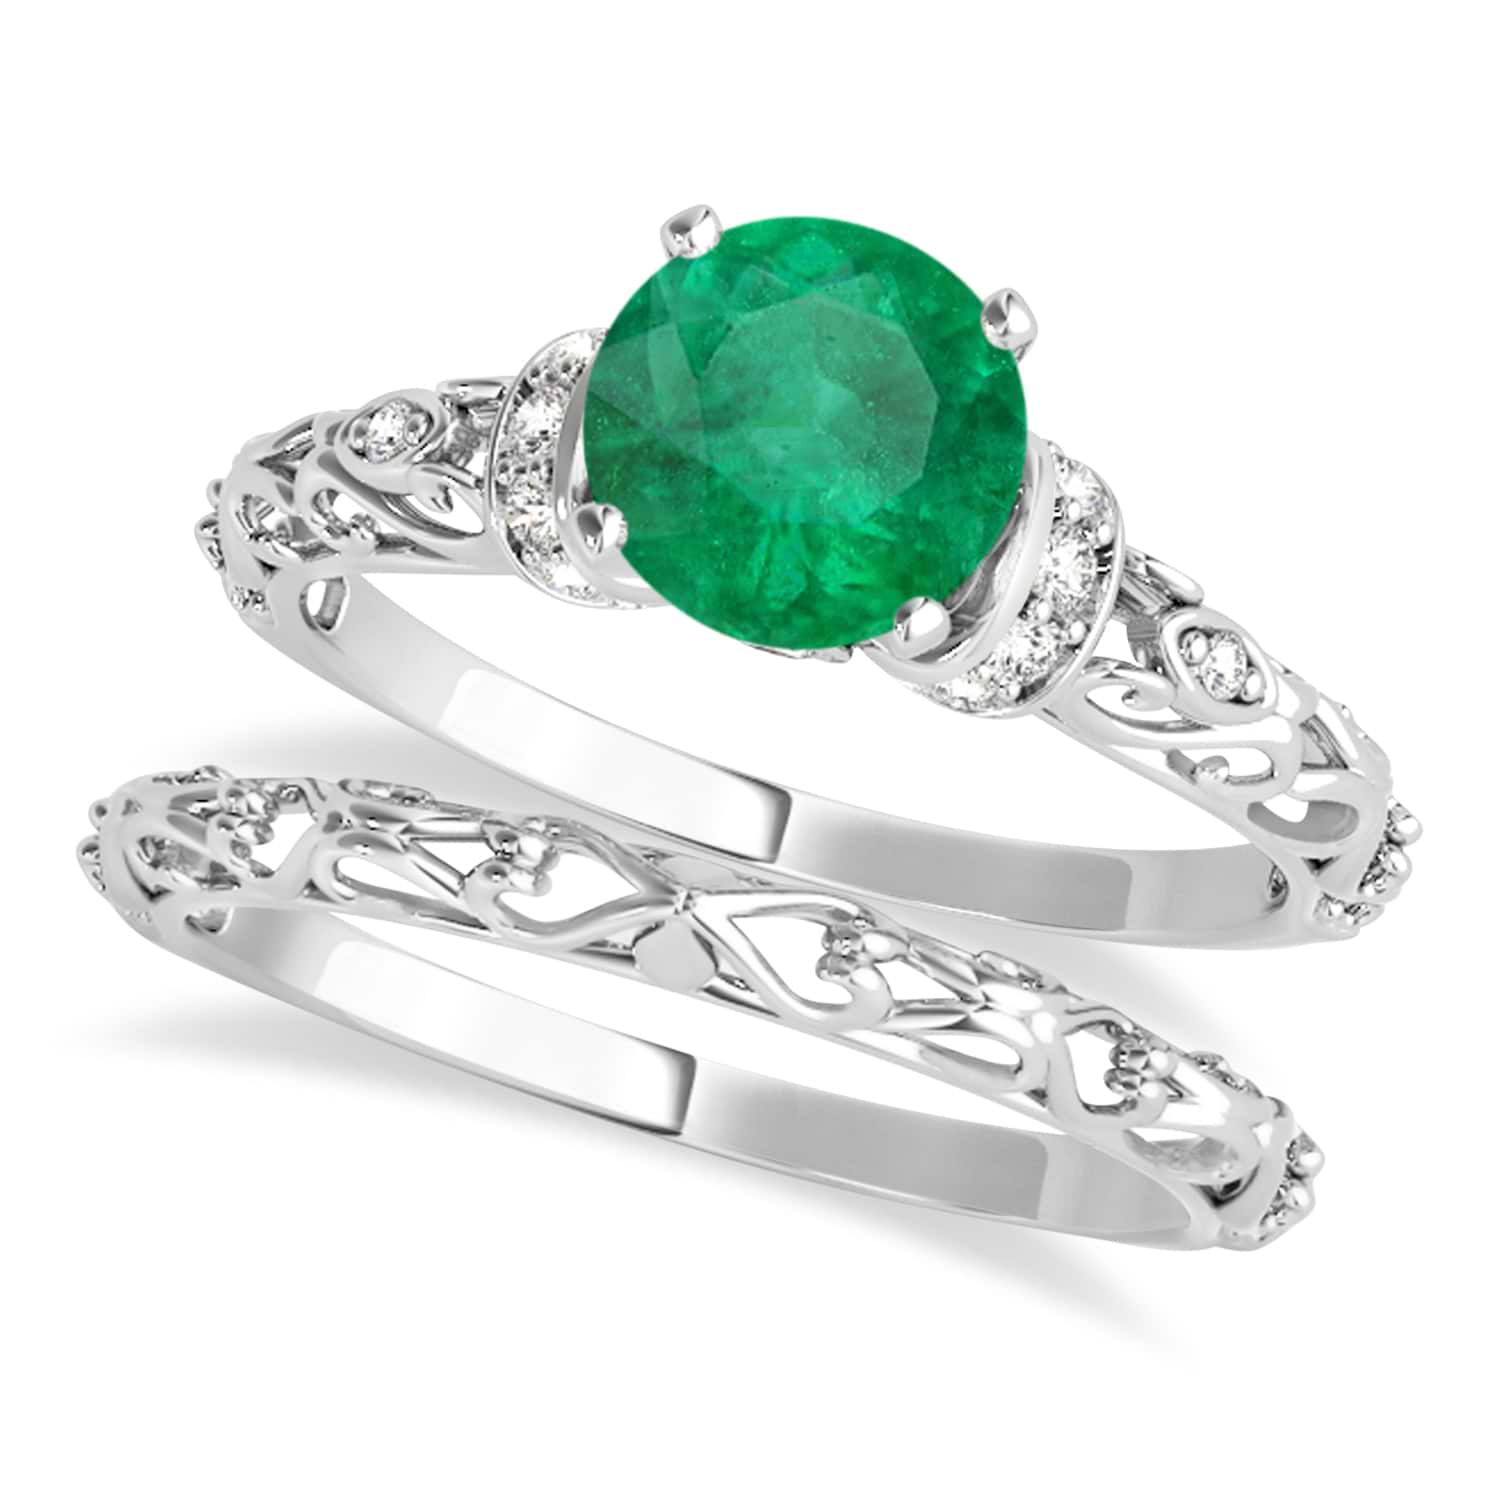 Emerald & Diamond Antique Style Bridal Set 18k White Gold (1.12ct)